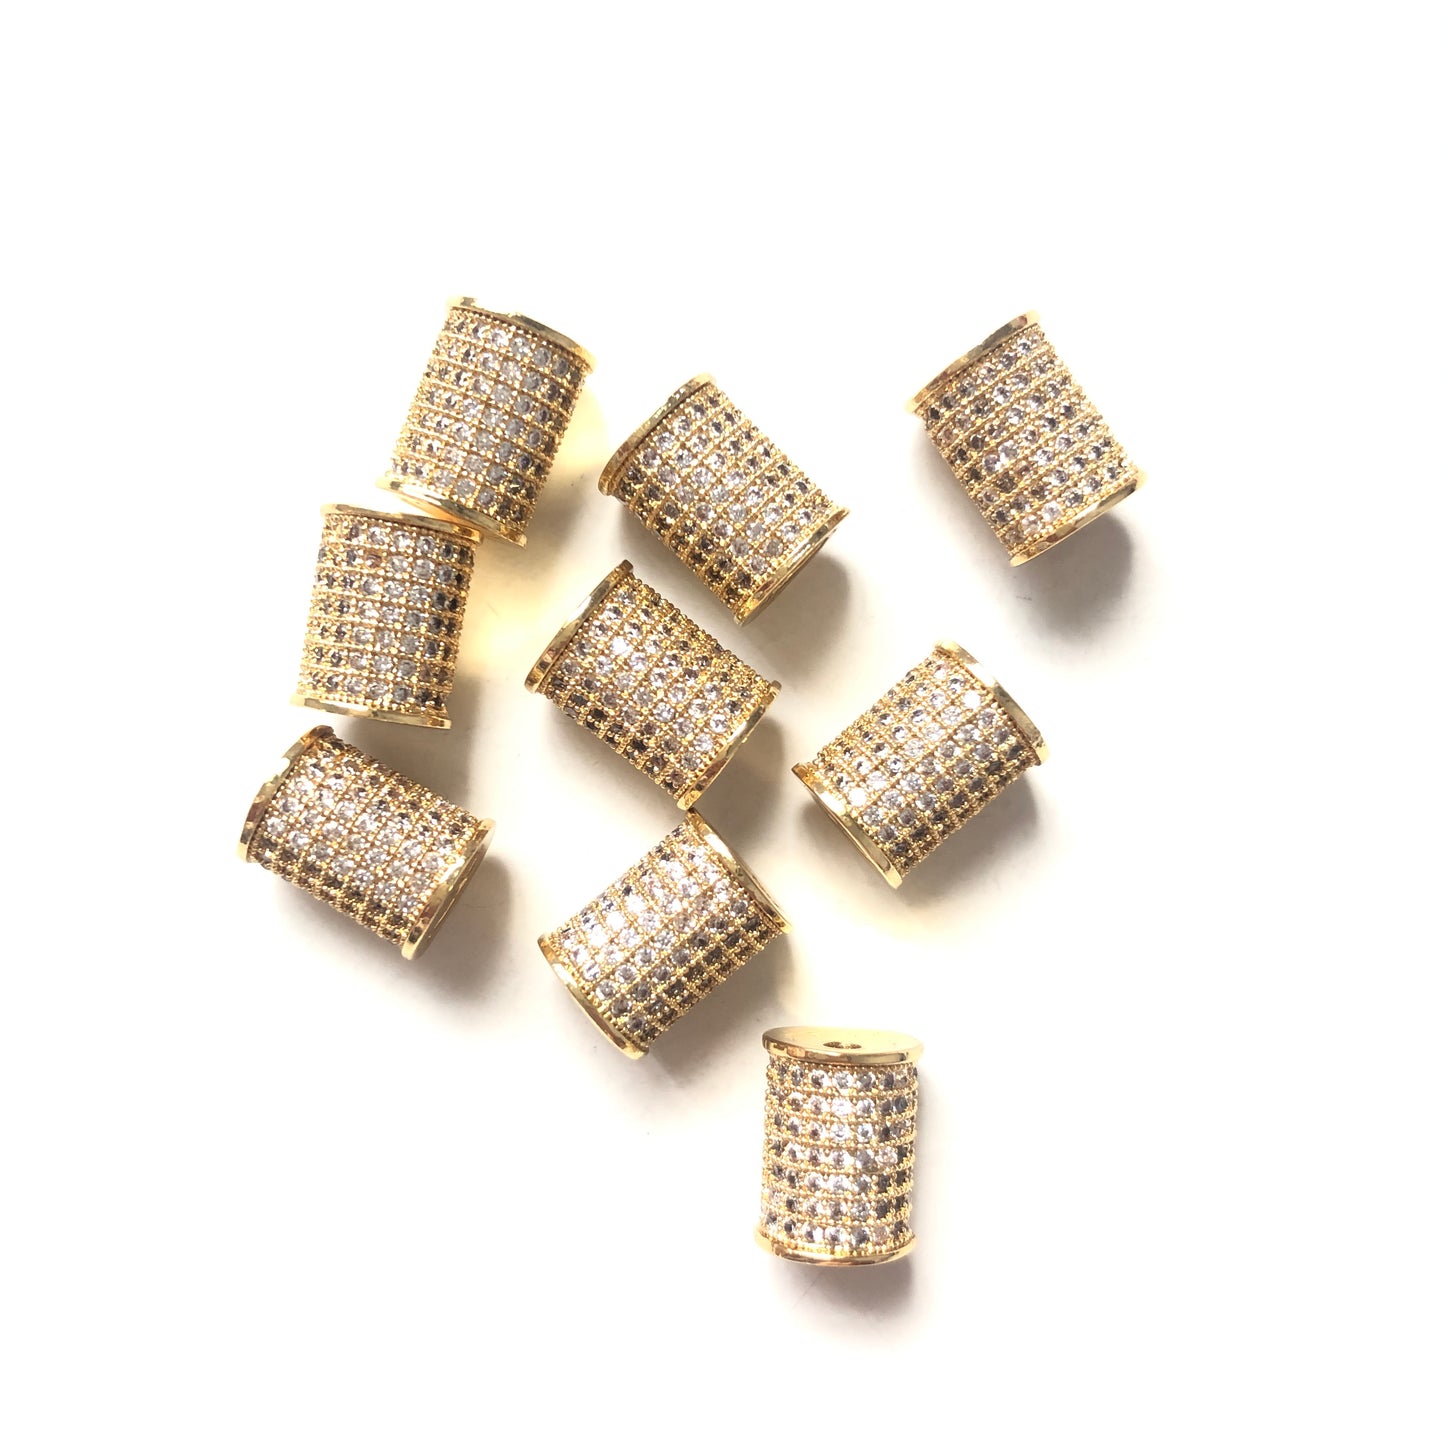 10pcs/lot 10*8mm CZ Paved Cylinder Rondelle Spacers Gold CZ Paved Spacers Rondelle Beads Charms Beads Beyond